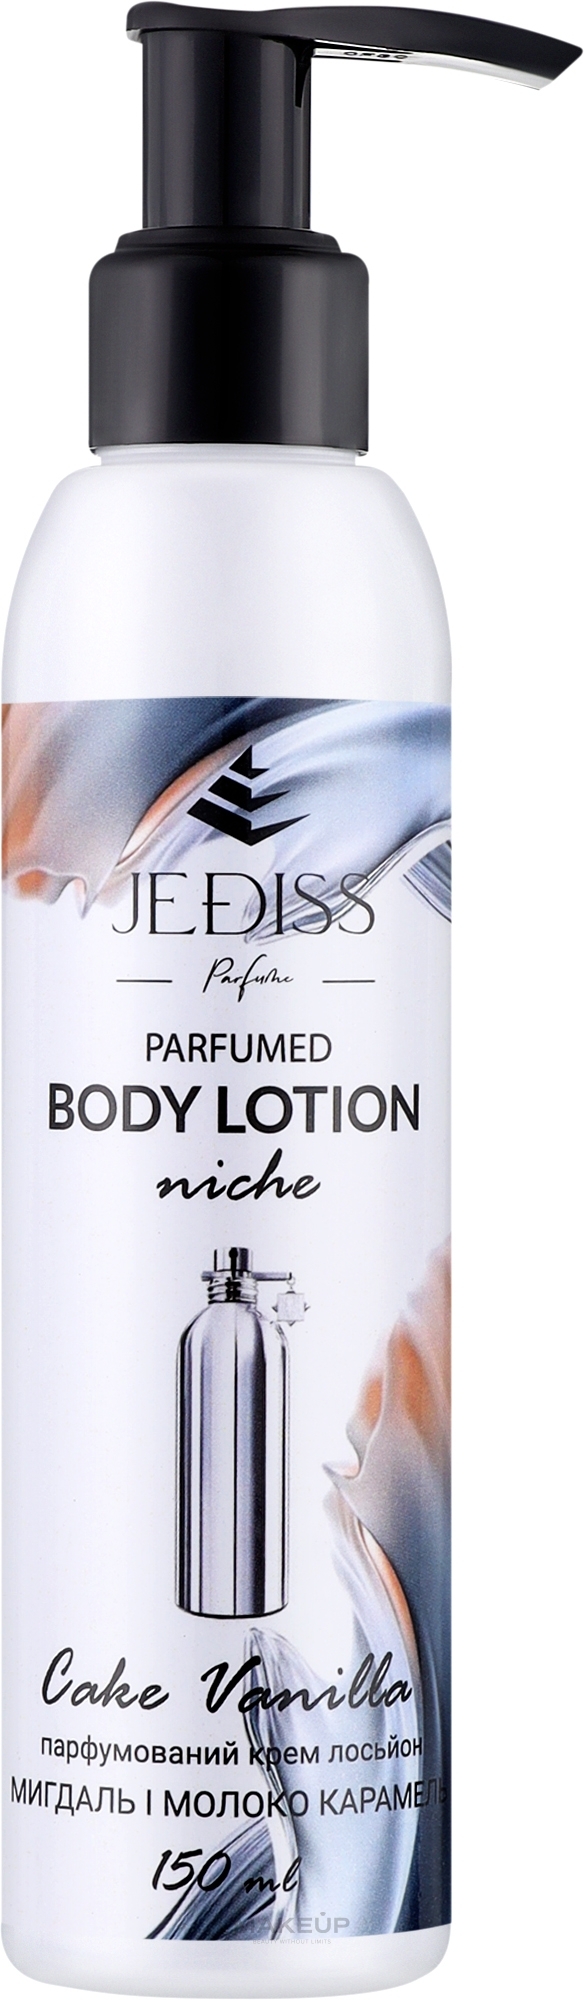 Парфюмированный лосьон для тела "Cake Vanilla" - Jediss Perfumed Body Lotion — фото 150ml